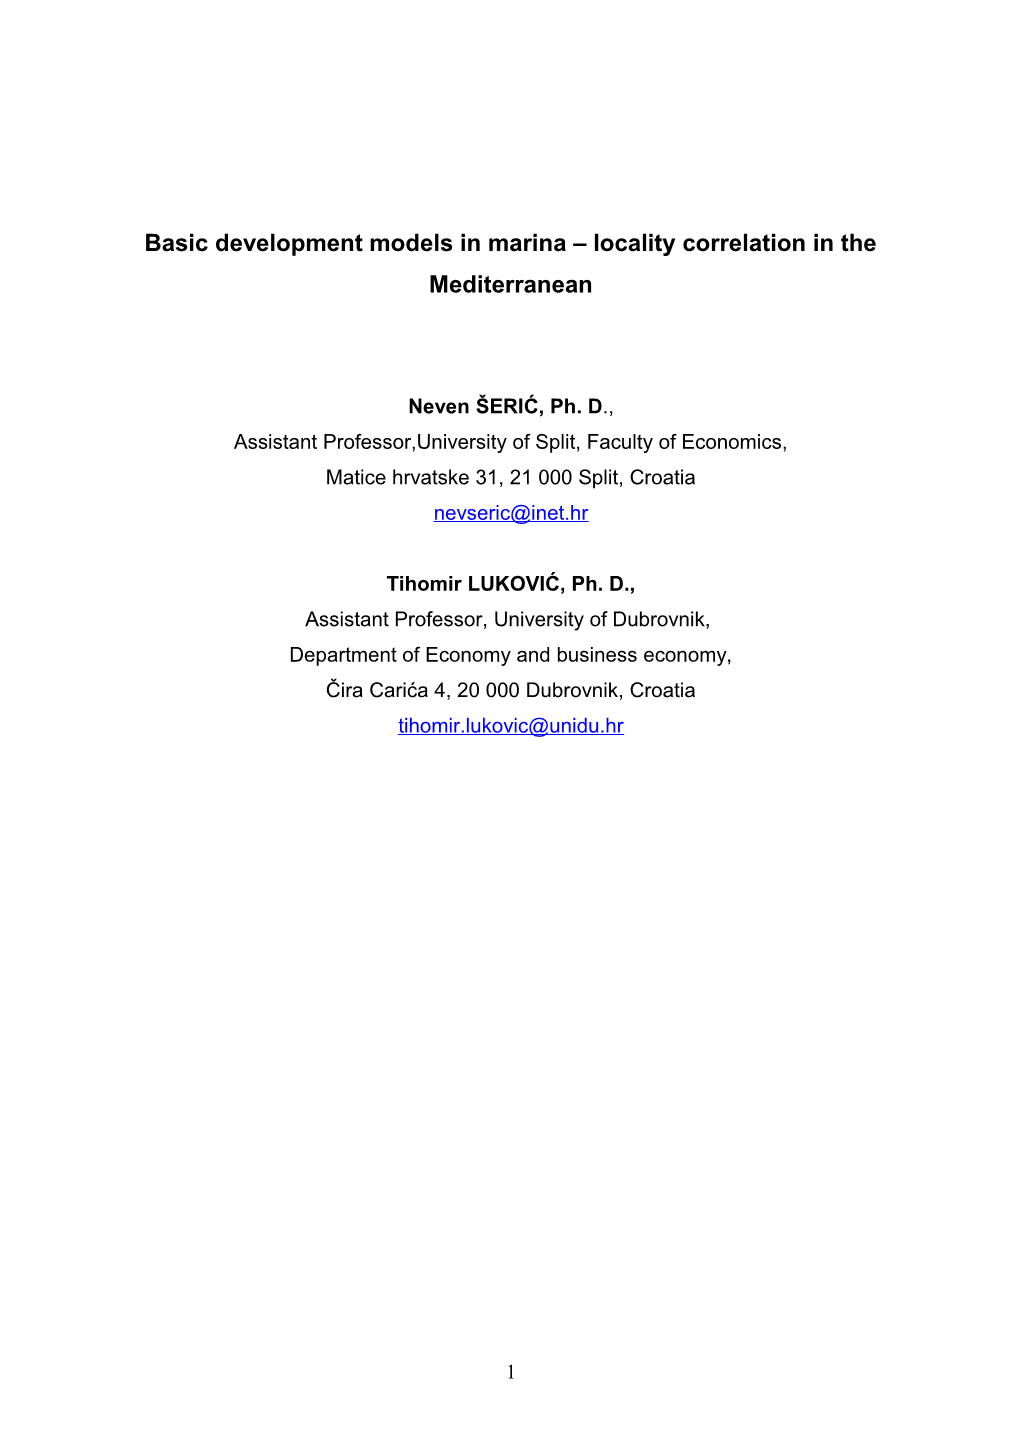 Basic Development Models in Marina Locality Correlation in the Mediterranean